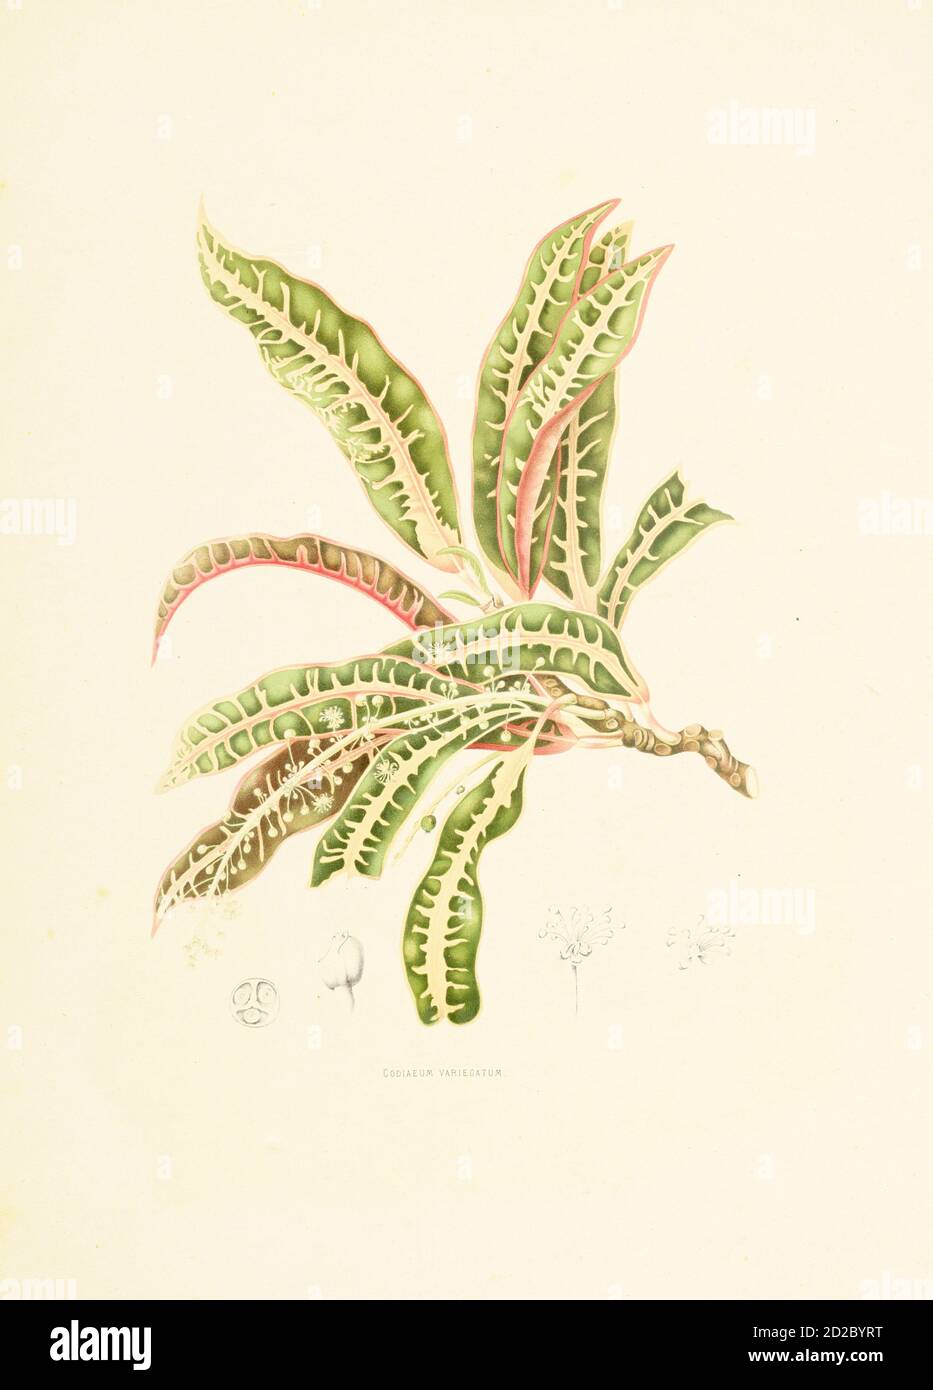 Antique illustration of a codiaeum variegatum (also known as croton variegatum, garden croton or variegated croton). Engraving by Berthe Hoola van Noo Stock Photo